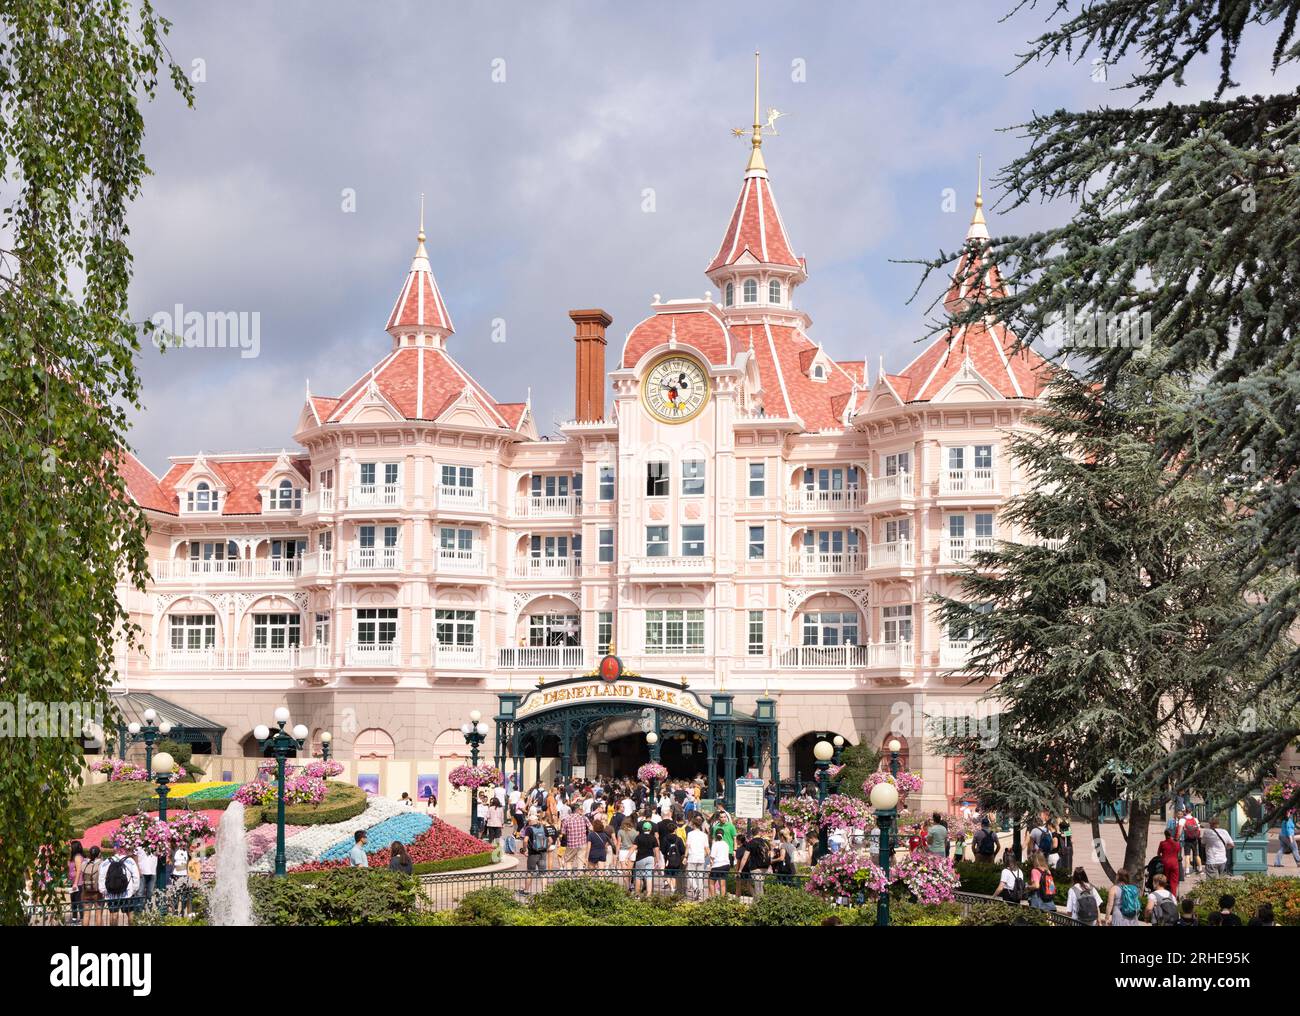 The Disneyland hotel, containing the entrance to Disneyland Paris for the visitors; Disney, Paris France Europe Stock Photo